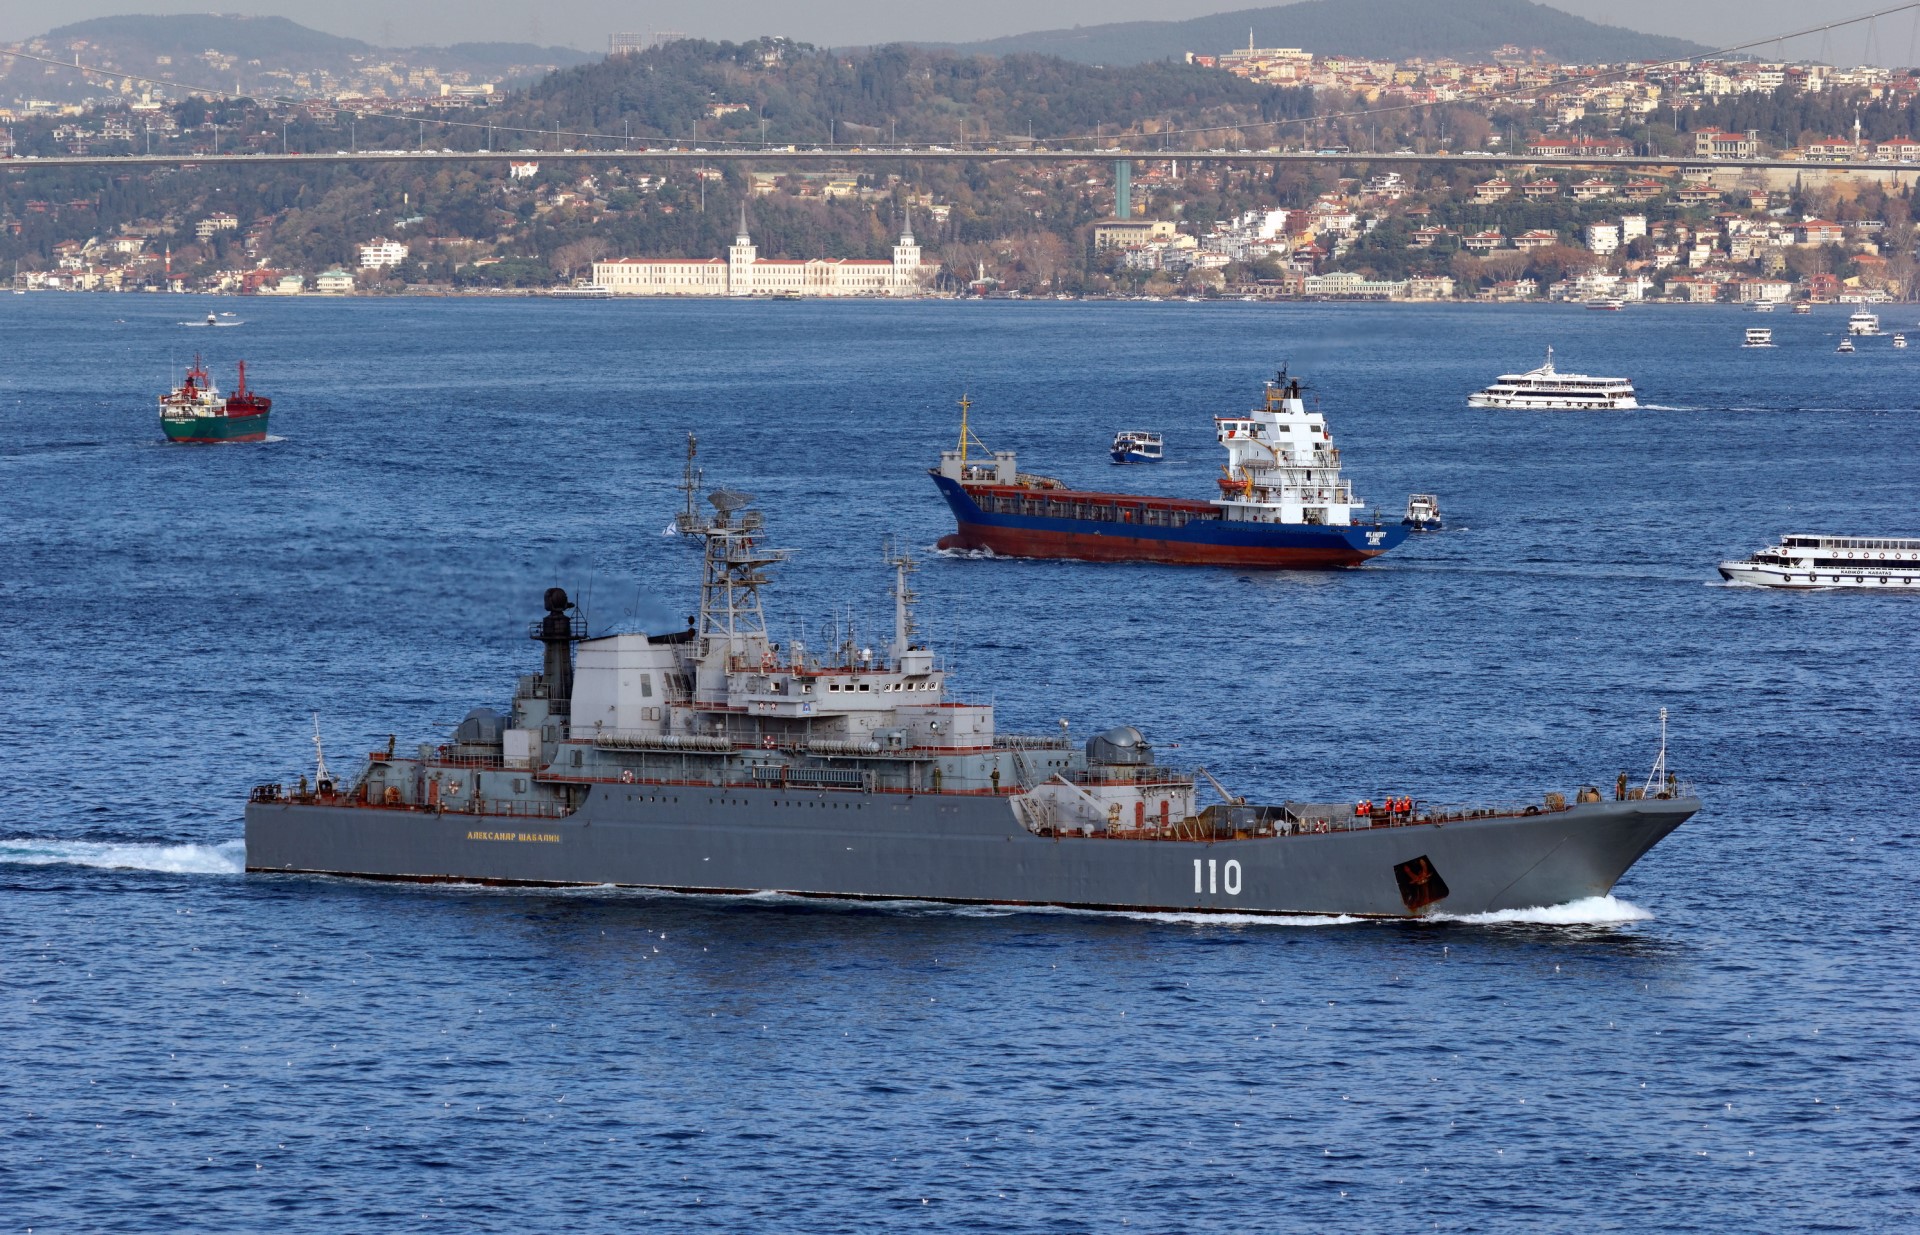 Russian Navy's Ropucha-class large landing ship going through the Bosporus Strait. Istanbul, Turkey, 2014 (Photo: Wikimedia Commons)